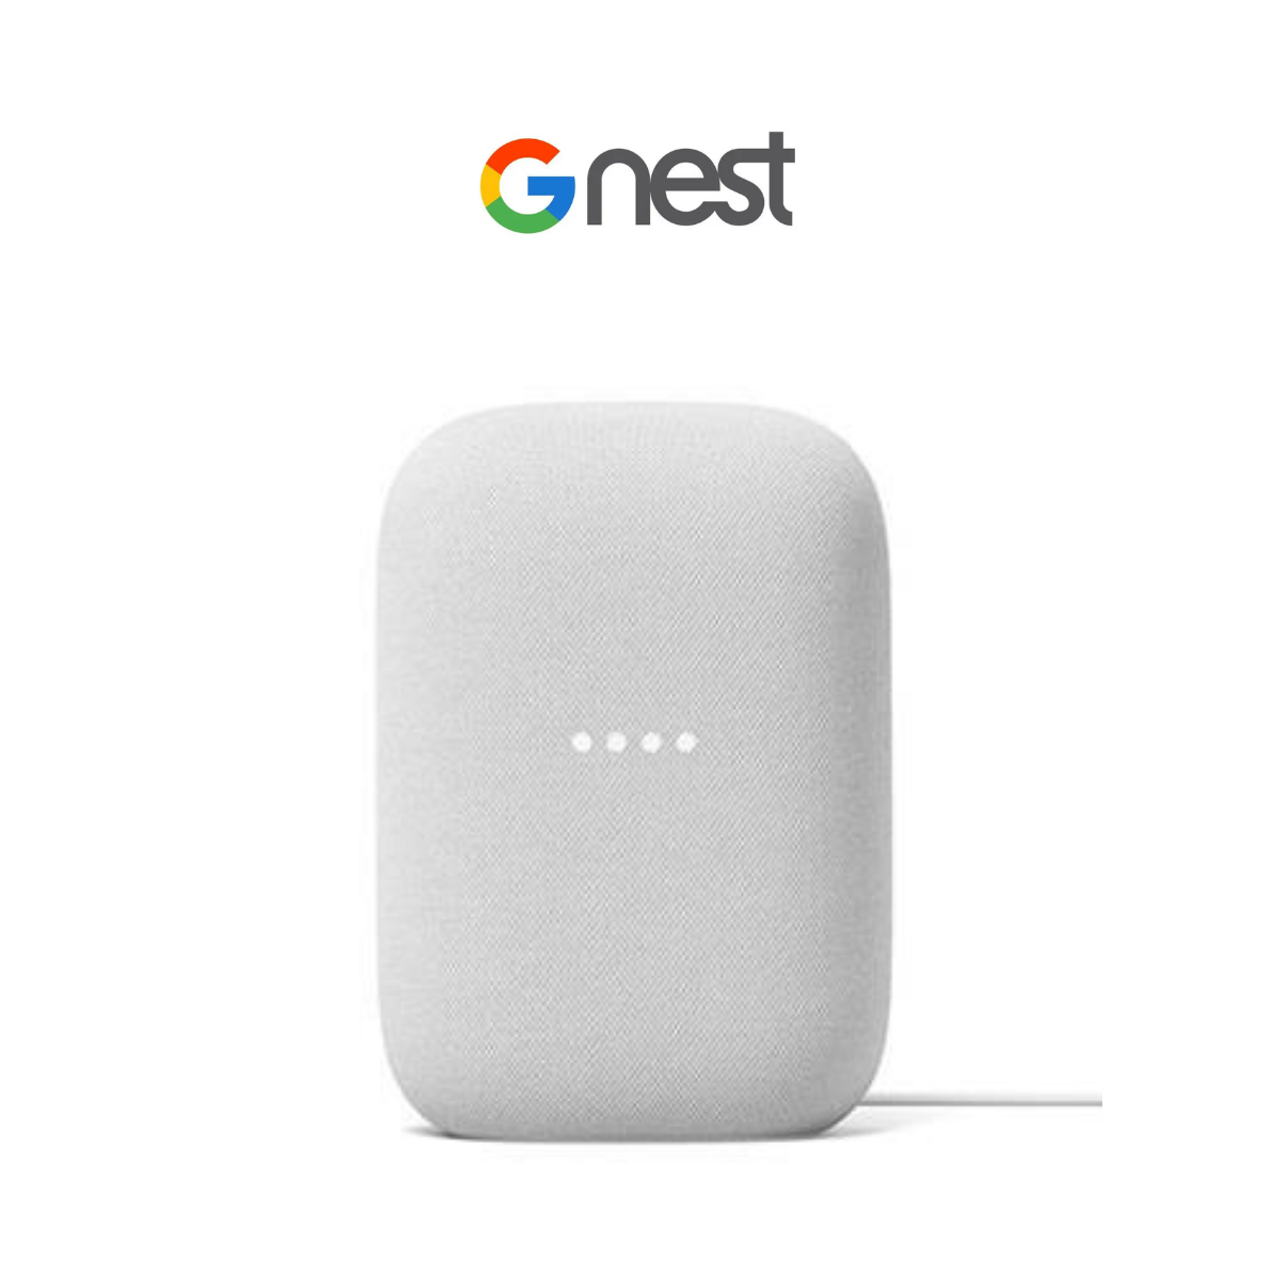 Google Nest Audio Smart Speaker product image